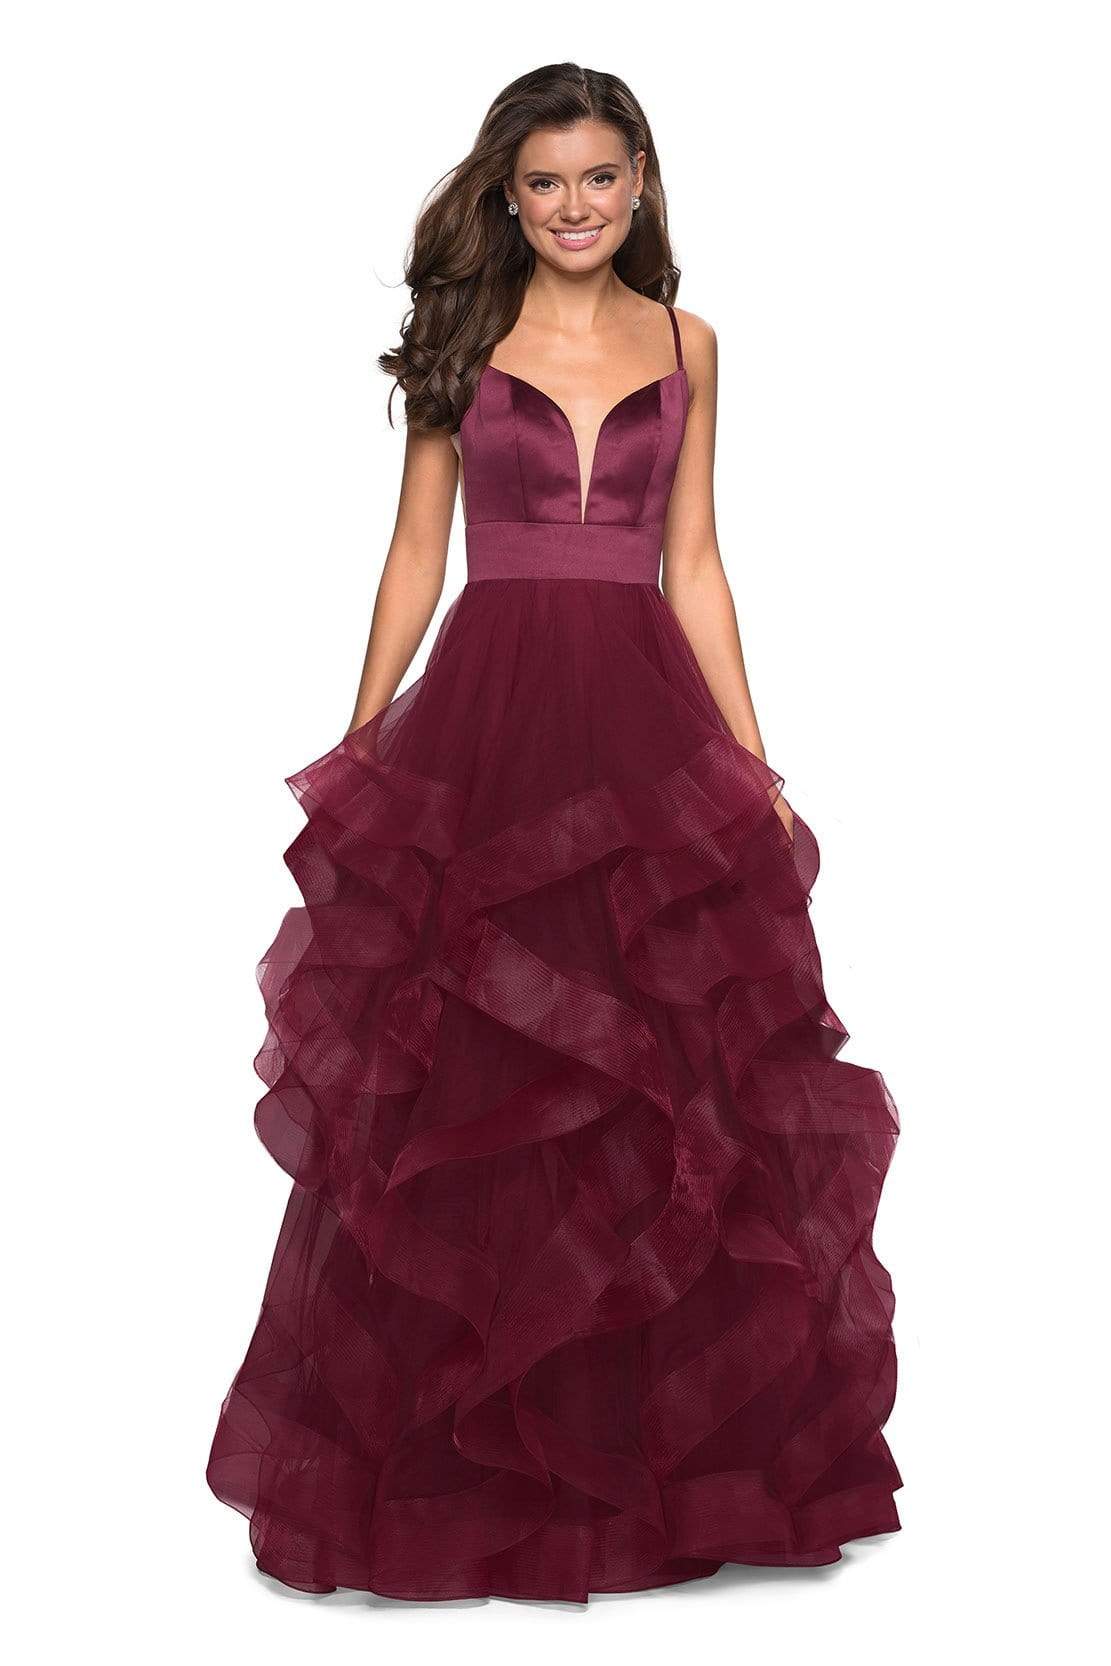 La Femme - 27024 Sleeveless Plunging Illusion Neckline Ruffles Ballgown Special Occasion Dress 00 / Burgundy